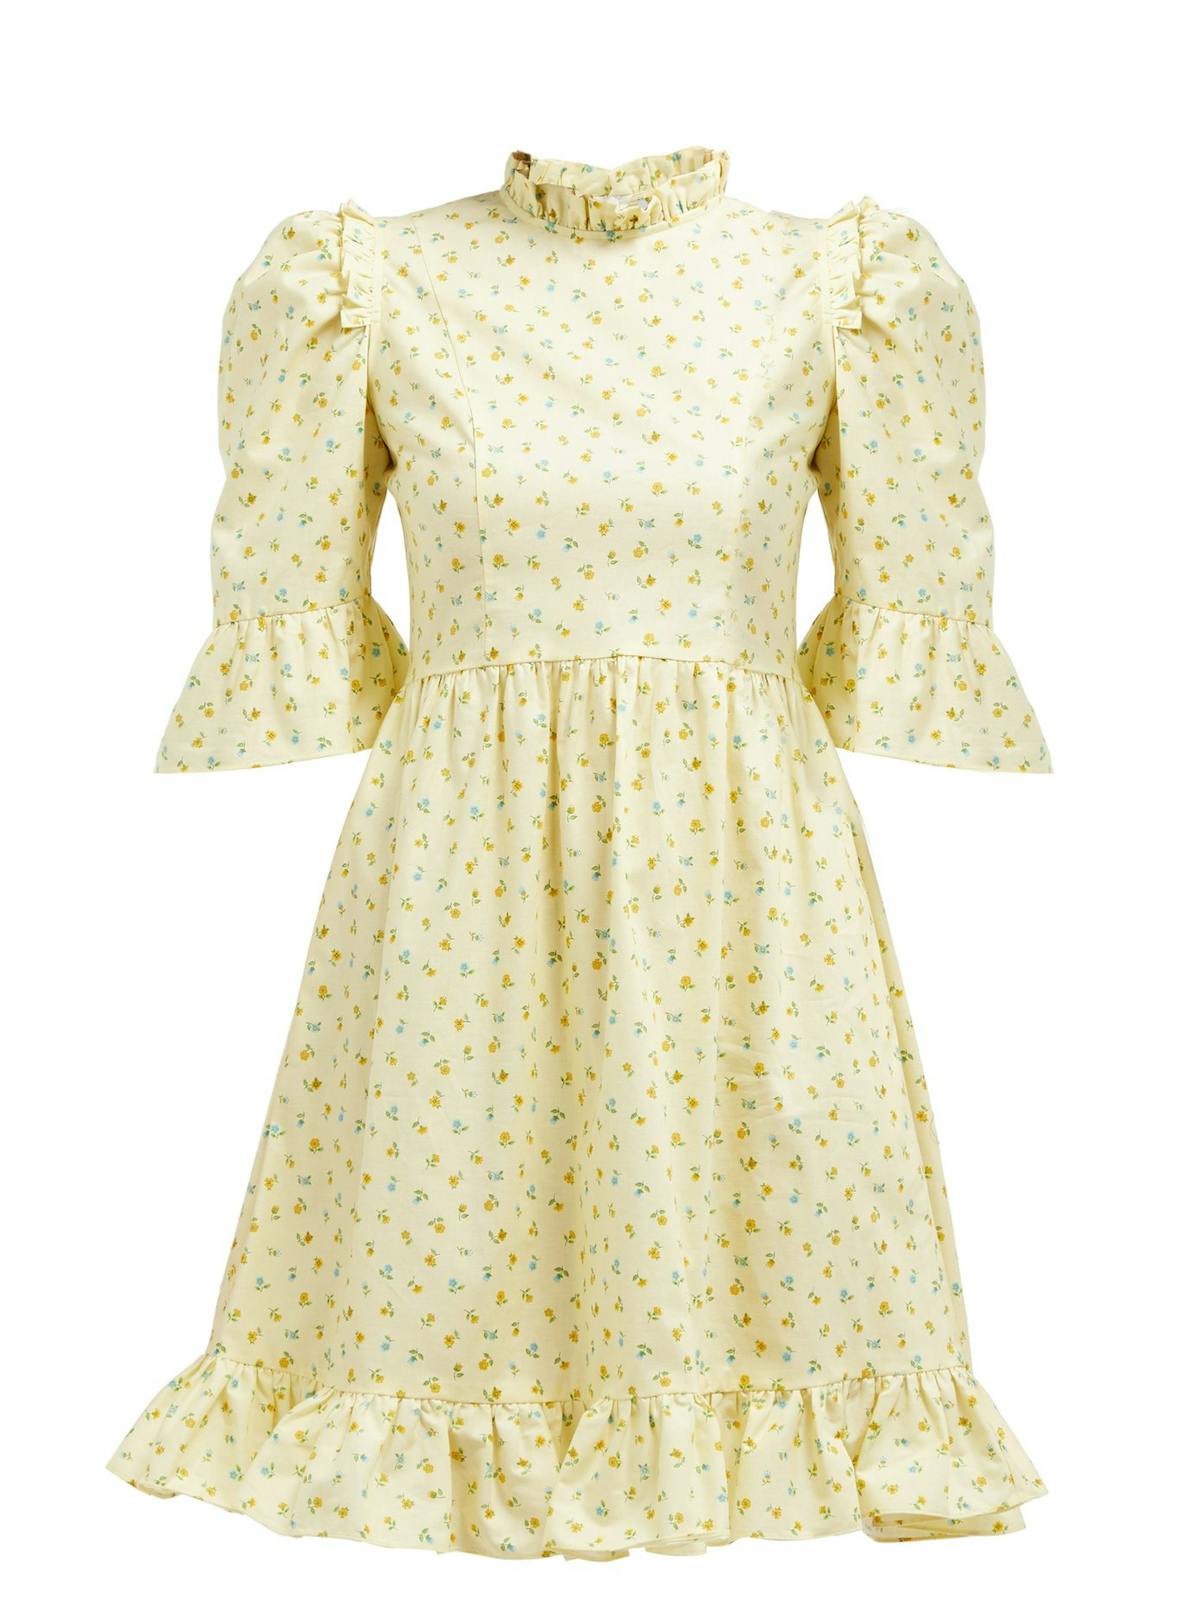 Shop floral midi & maxi dresses: Prairie dress trend